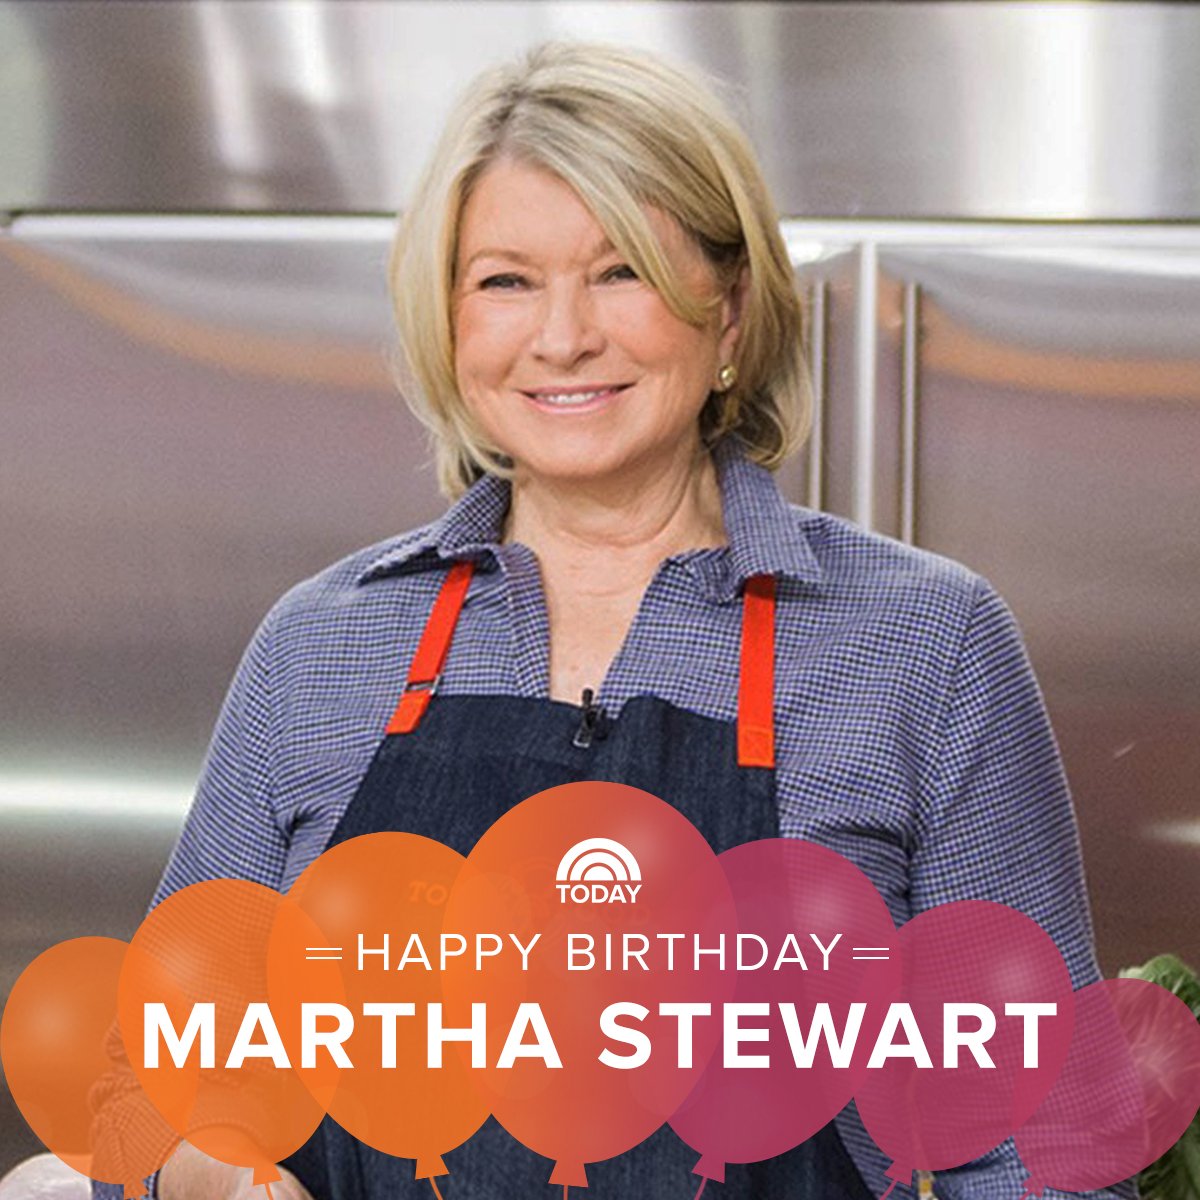 Happy birthday, Martha Stewart! 